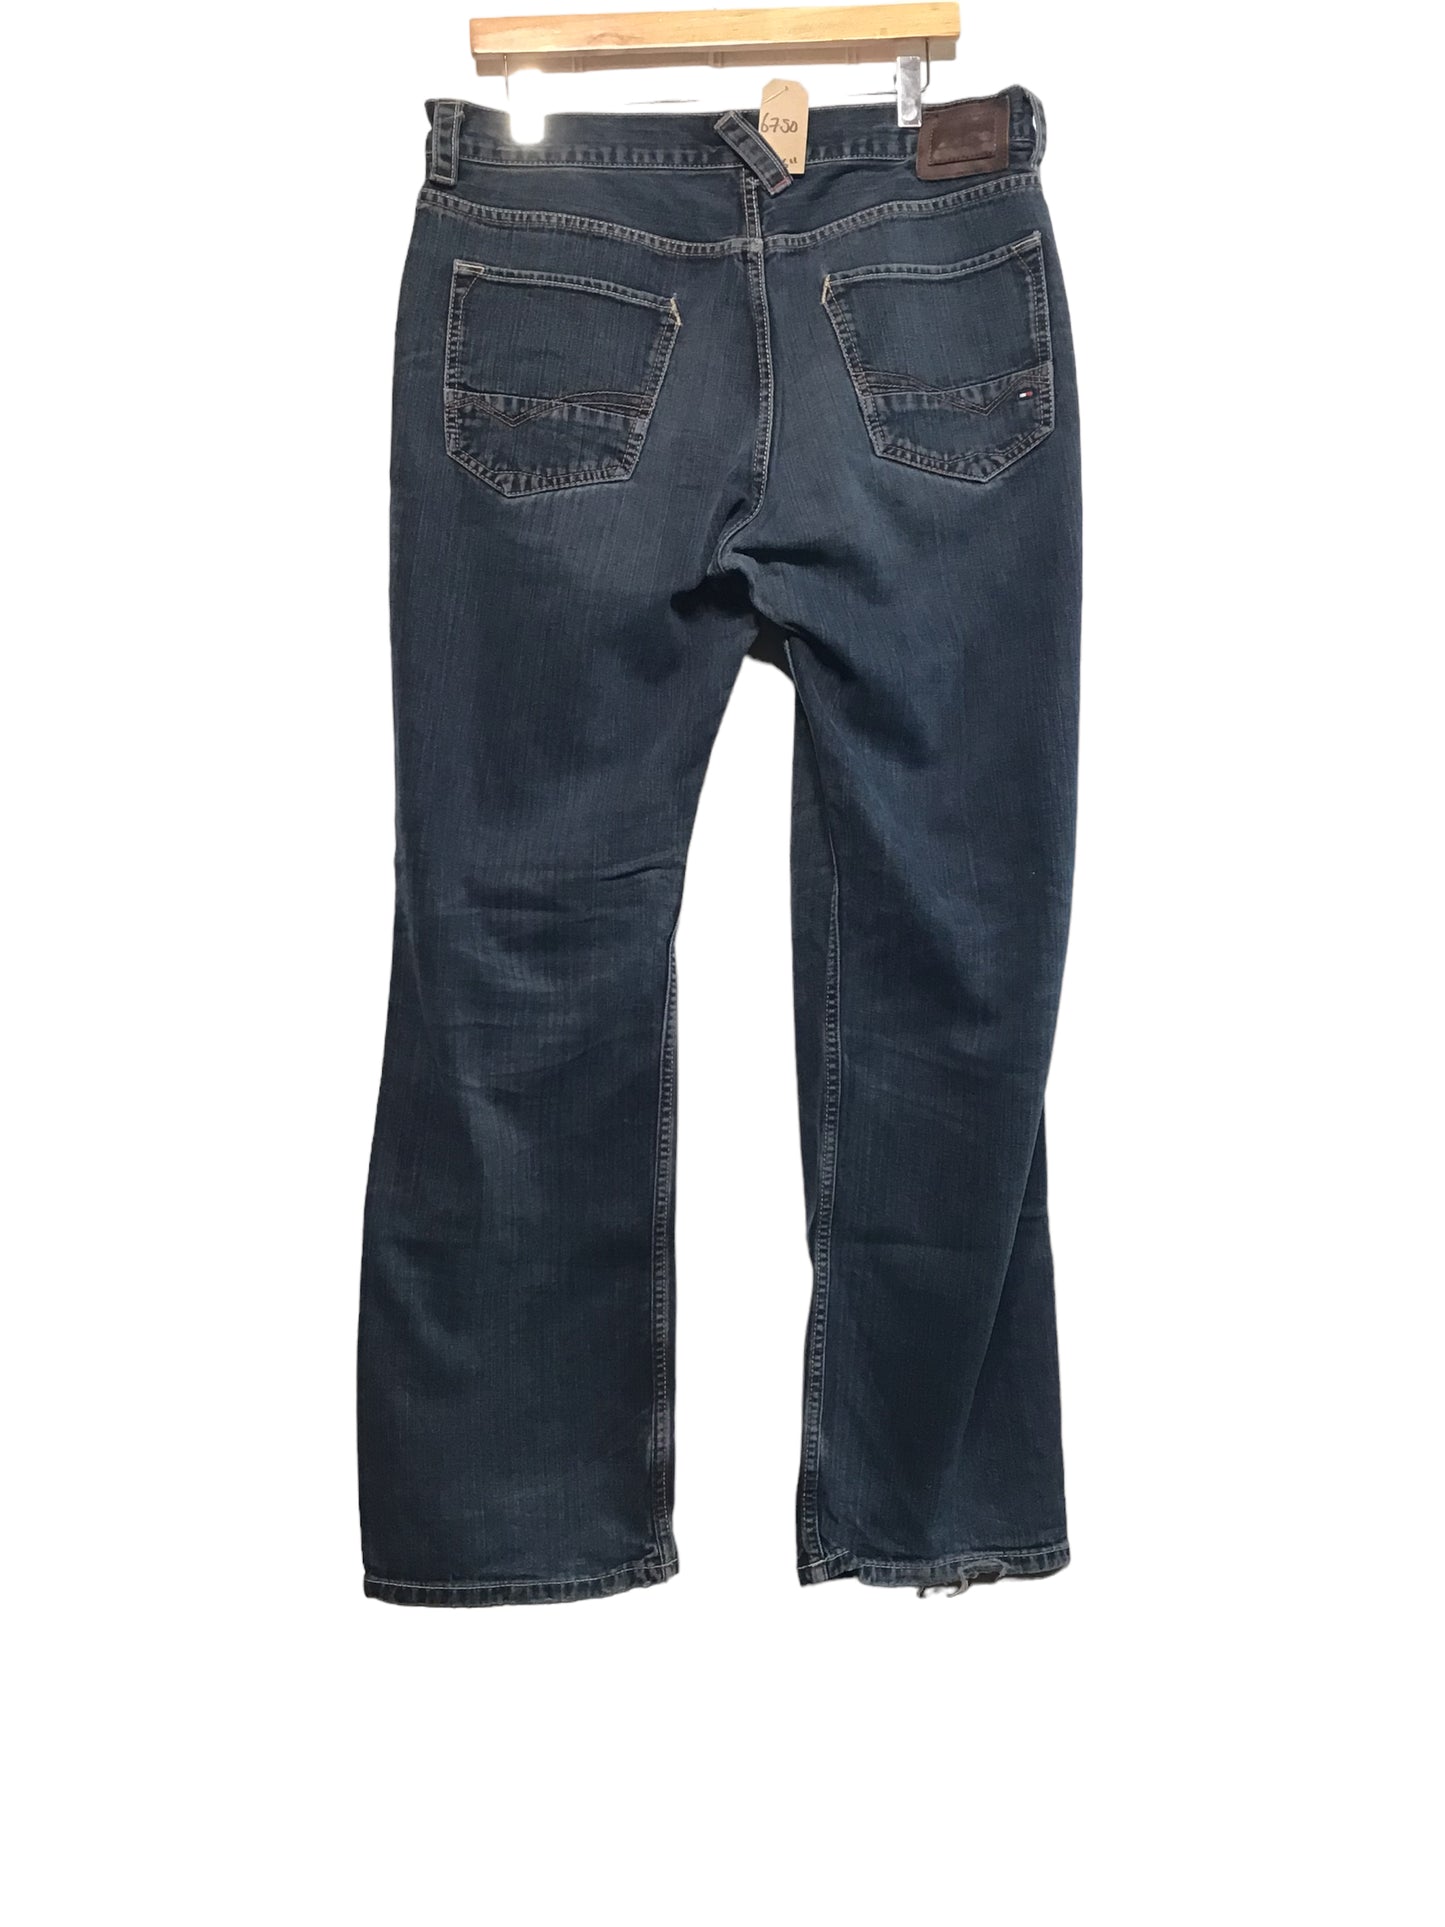 Tommy Hilfiger Jeans (36x31)